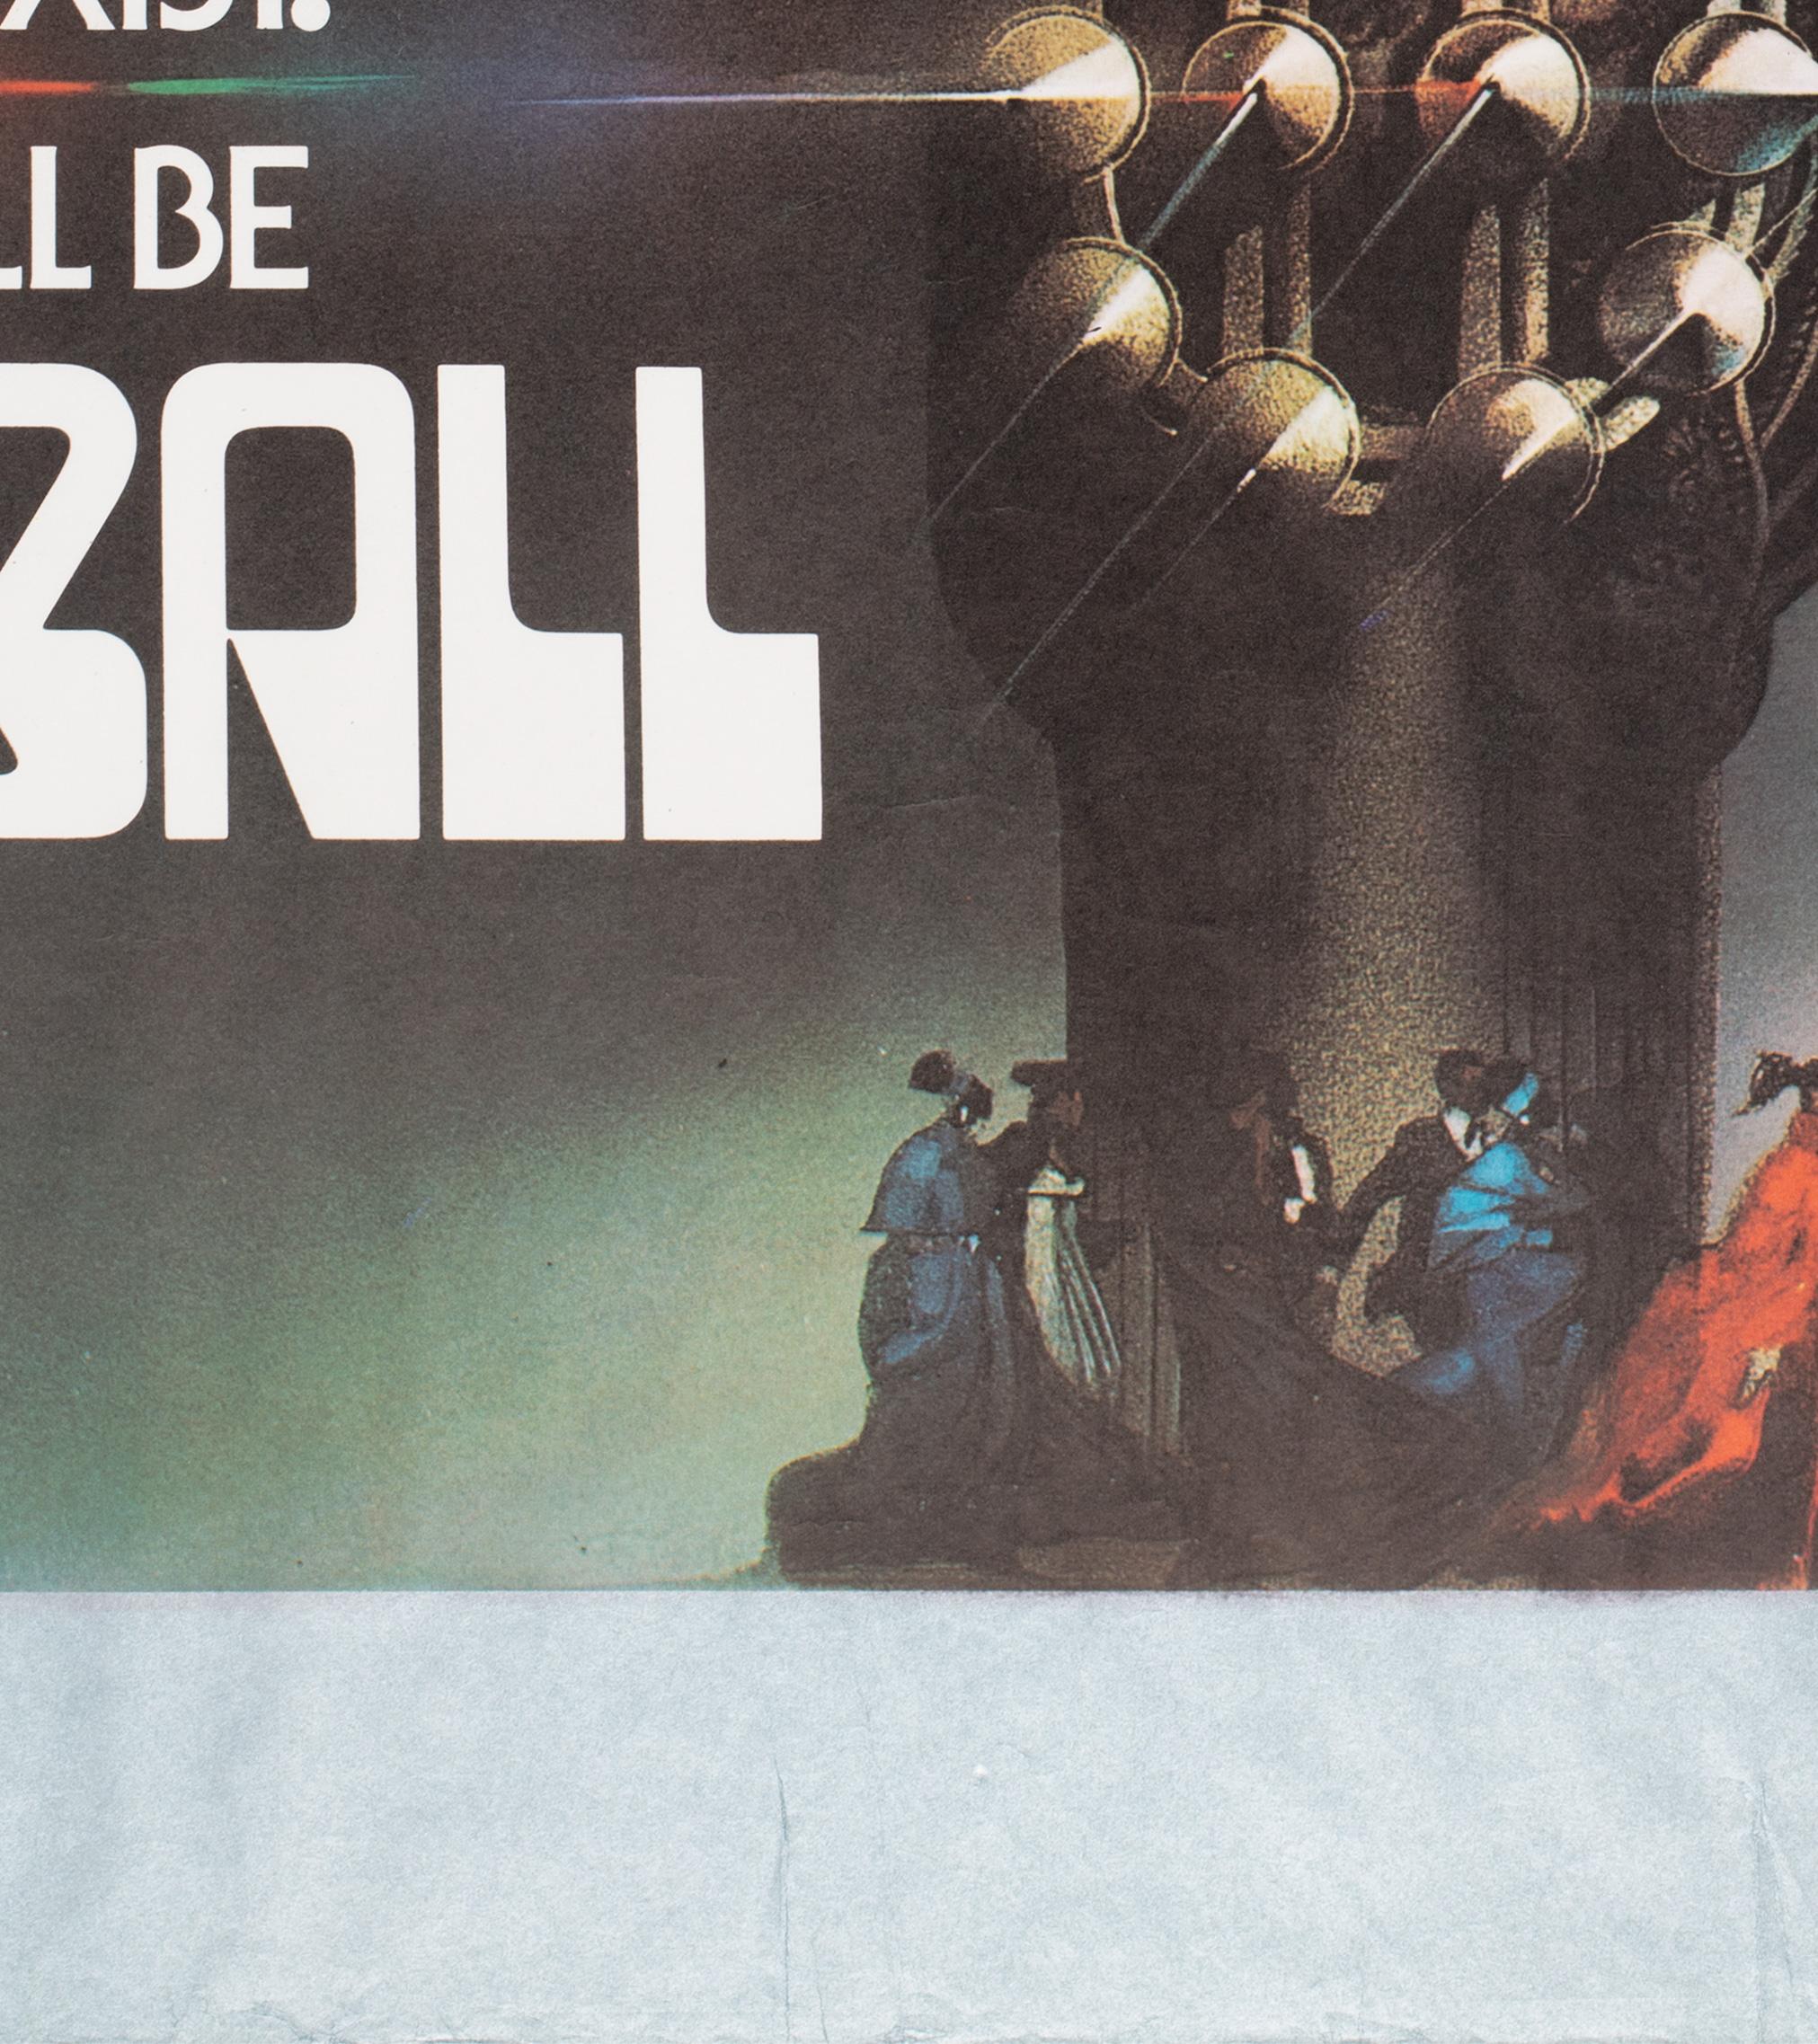 Rollerball 1975 Rolled UK Quad Film Poster, Bob Peak For Sale 1